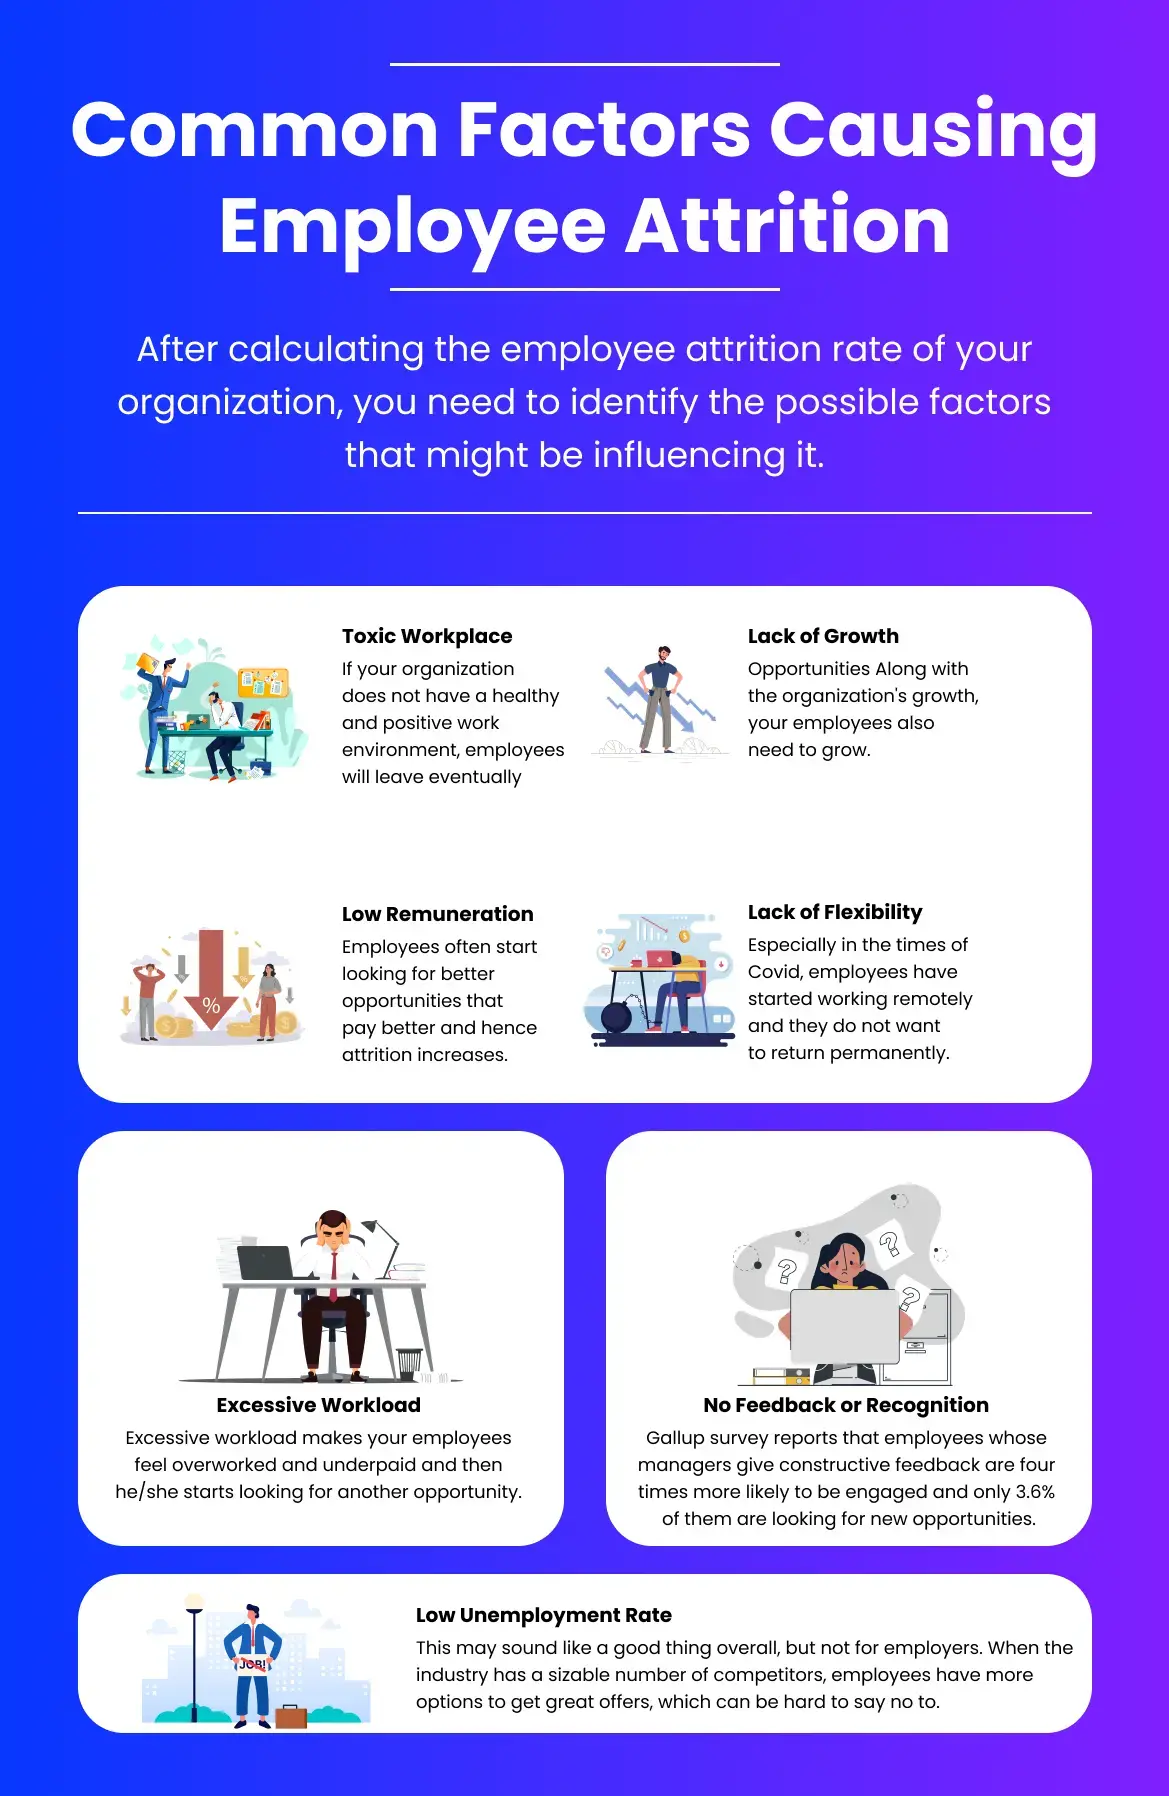 Factors causing employee attrition